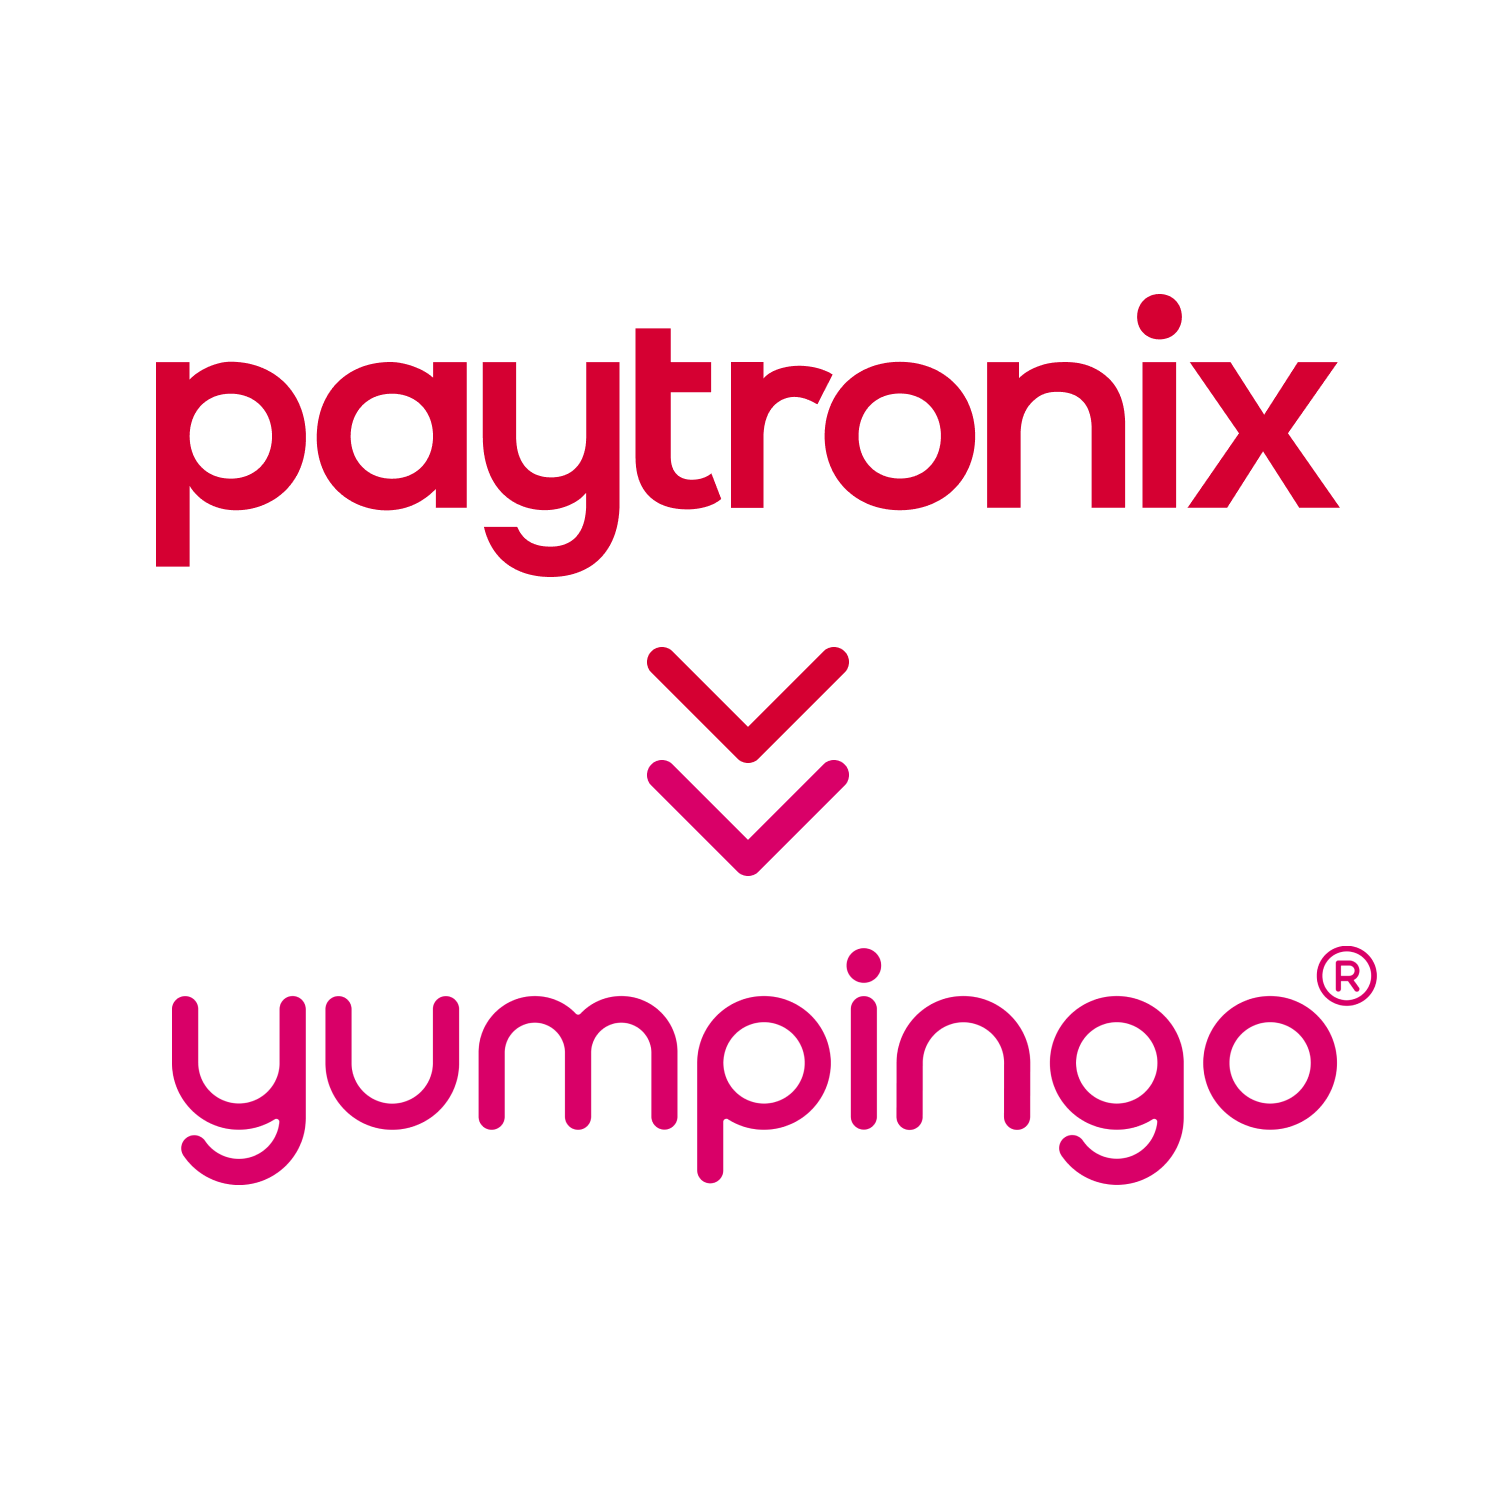 yumpingo paytronix